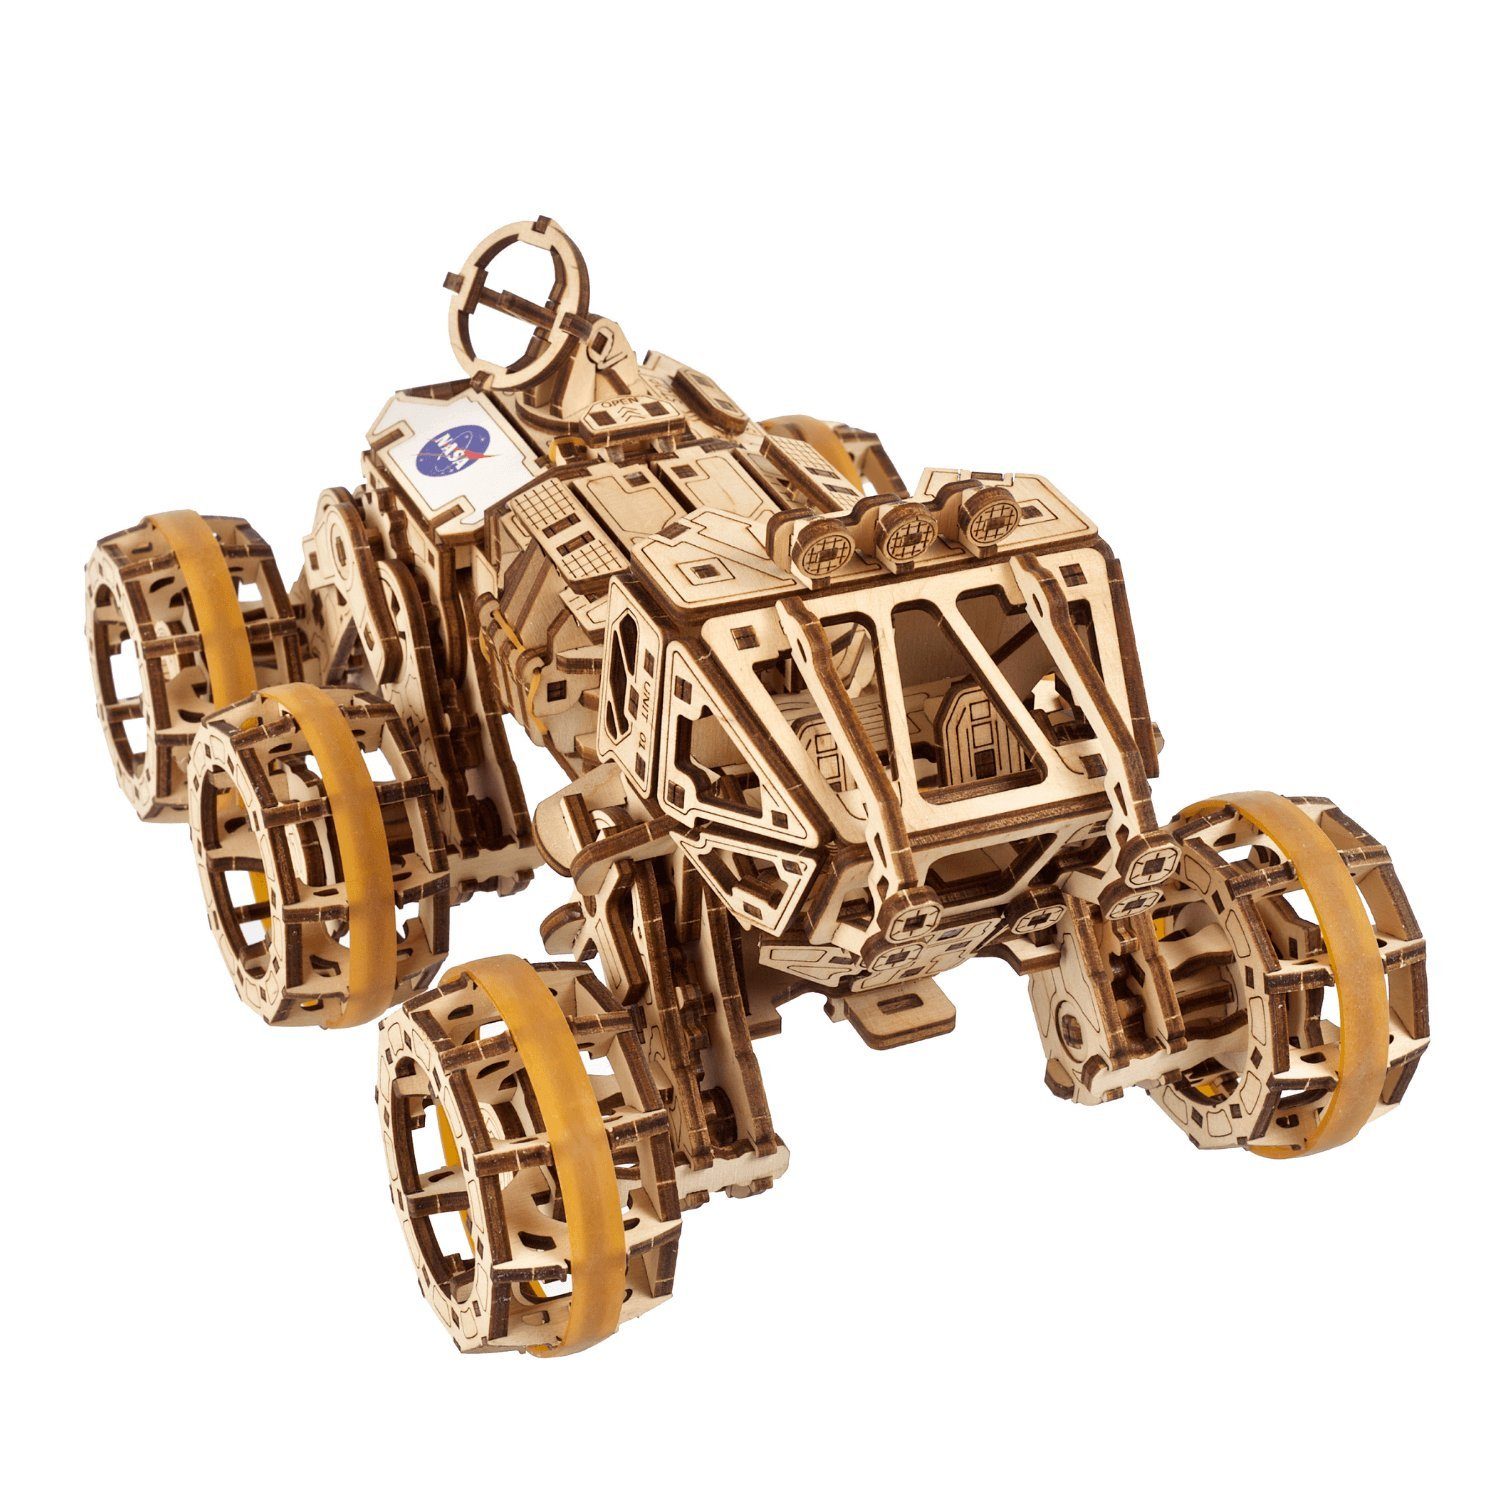 UGEARS Puzzle Ugears Bemannter Mars-Rover Puzzleteile 562 Mechanisches Holzpuzzle